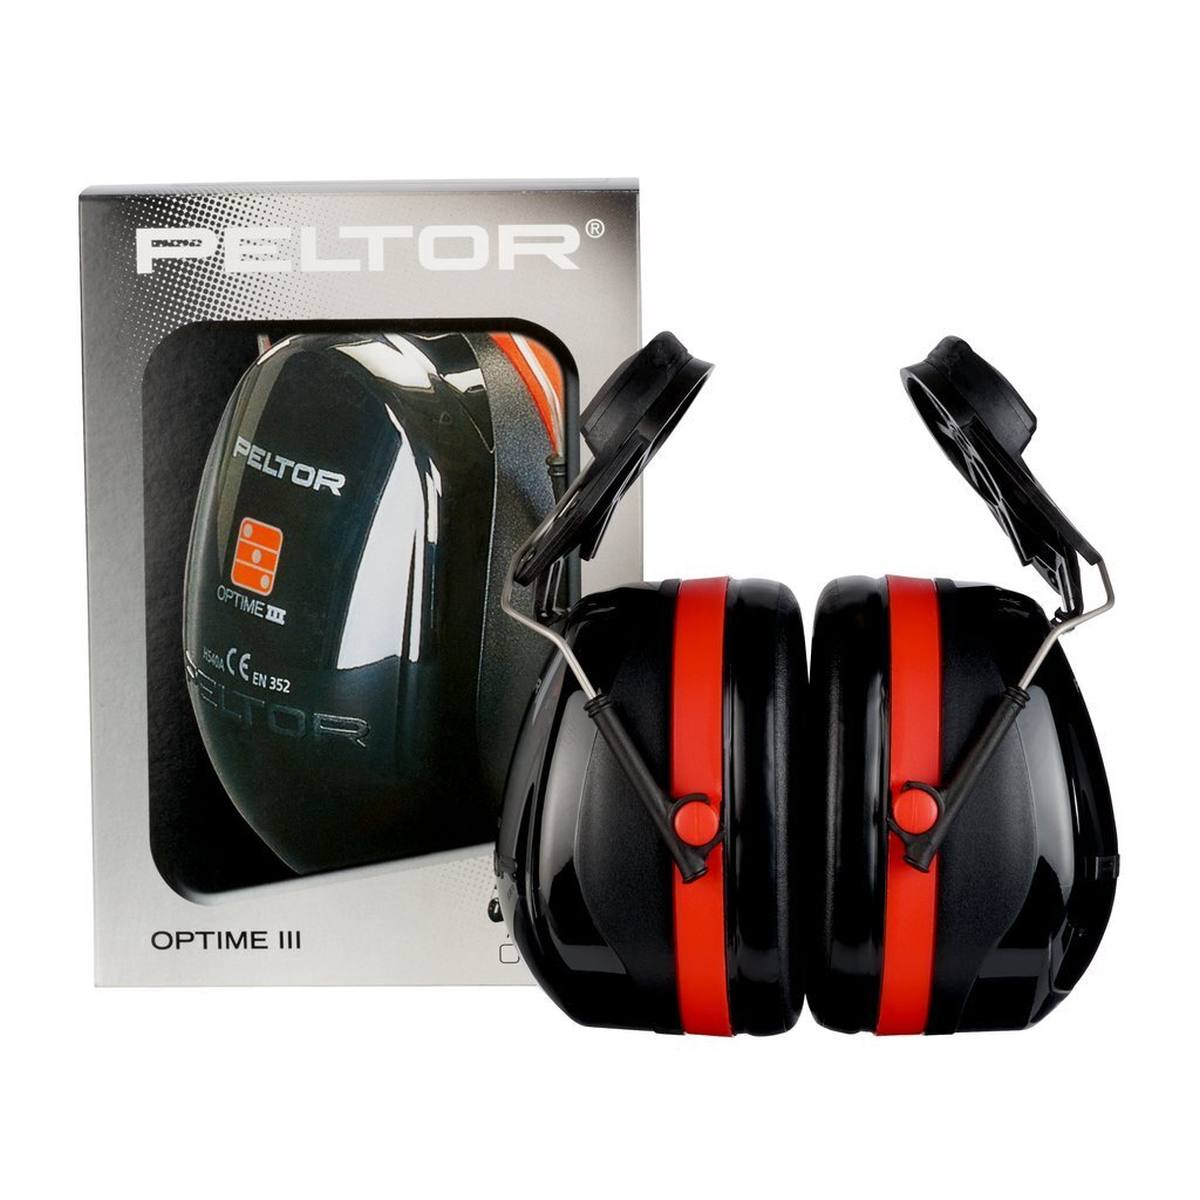 3M PELTOR Optime III earmuffs, helmet attachment, black, with helmet adapter, SNR=34 dB, H540P3H-413-SV